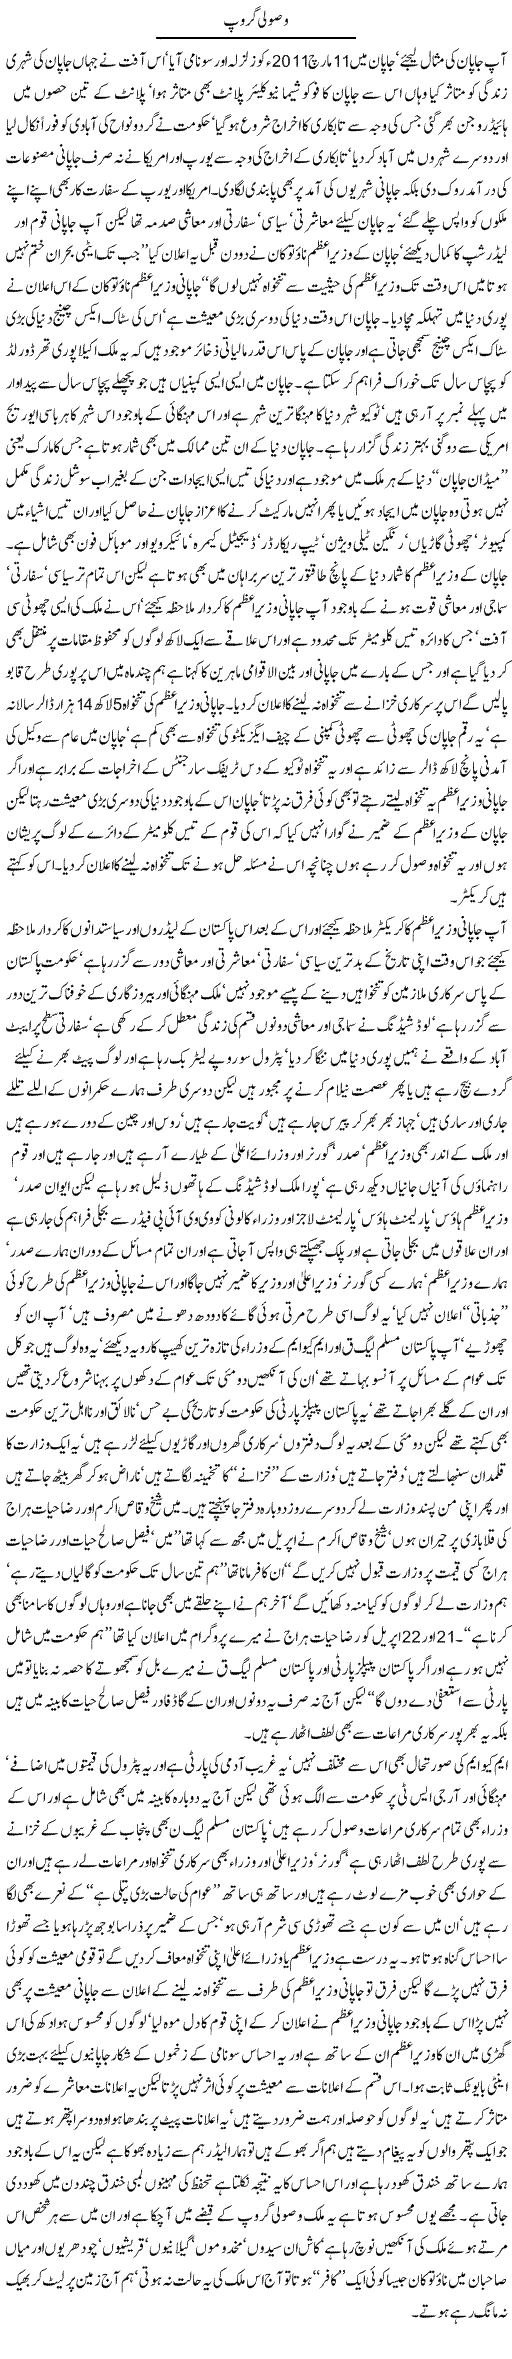 Japan and Pakistani Politicians Express Column Javed Chaudhry 12 May 2011